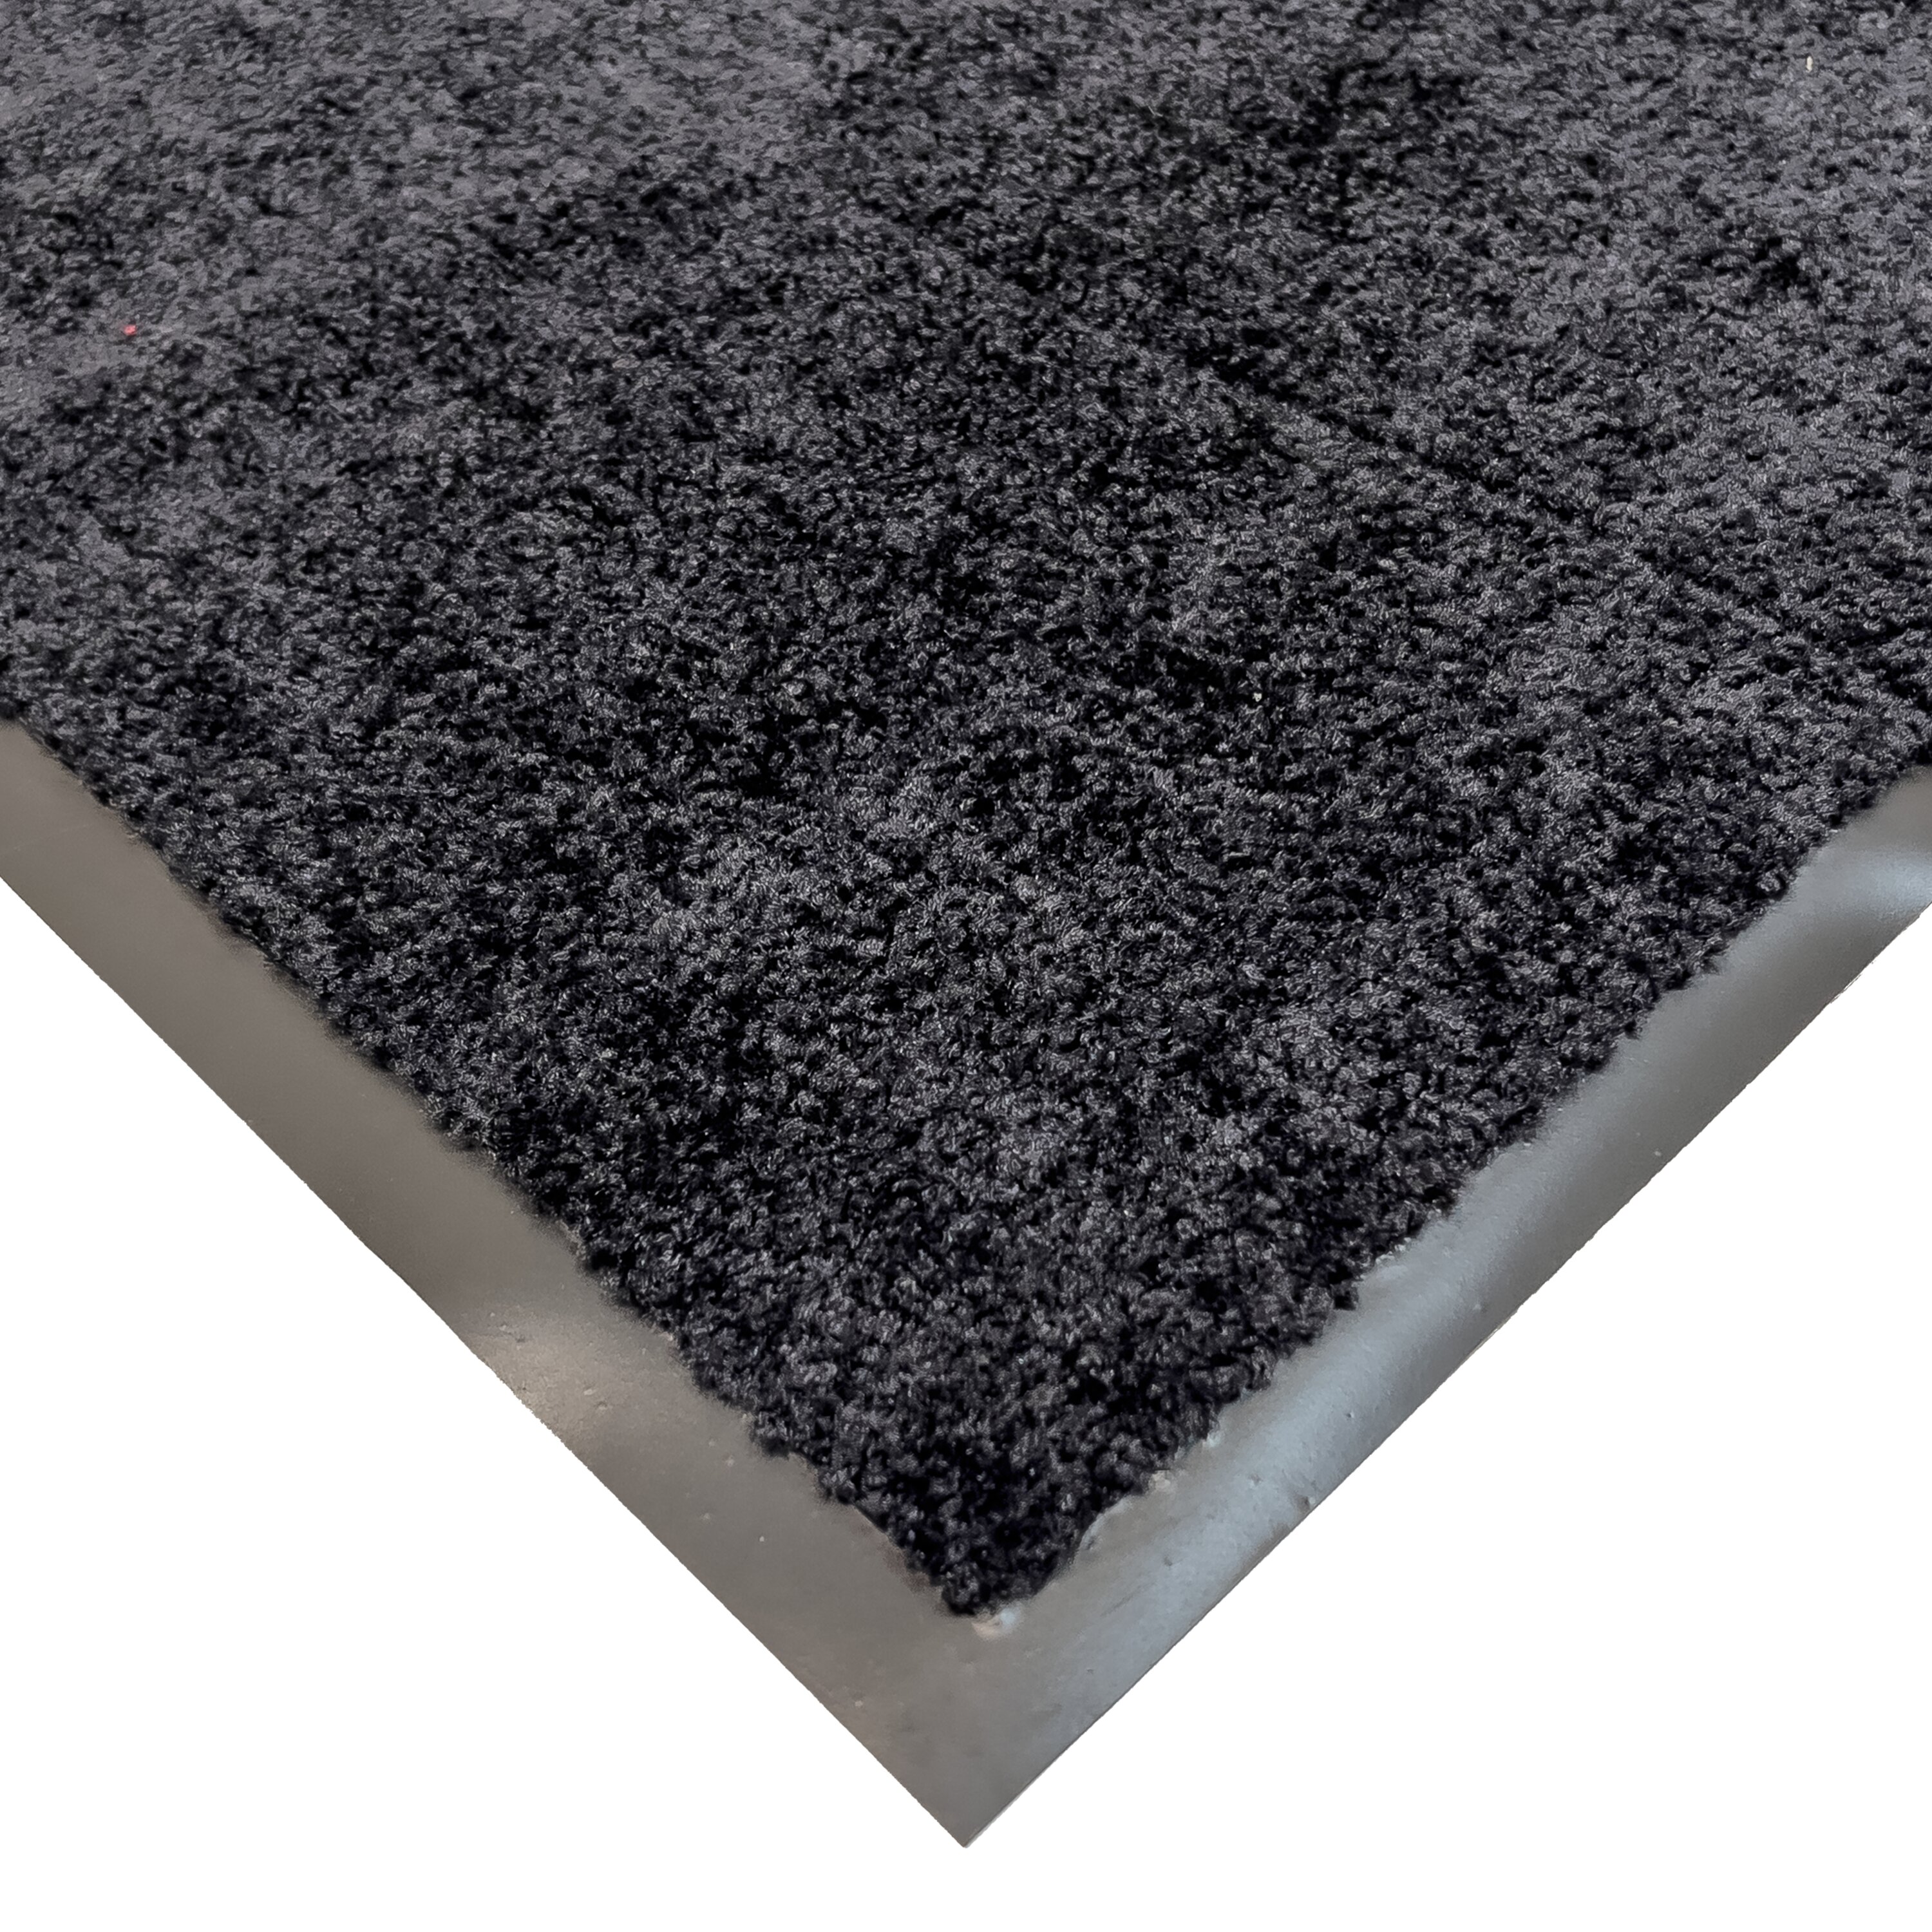 Čierna prateľná vstupná rohož (lem - 2 strany) (metráž) FLOMA Twister - dĺžka 1 cm, šírka 135 cm, výška 0,8 cm